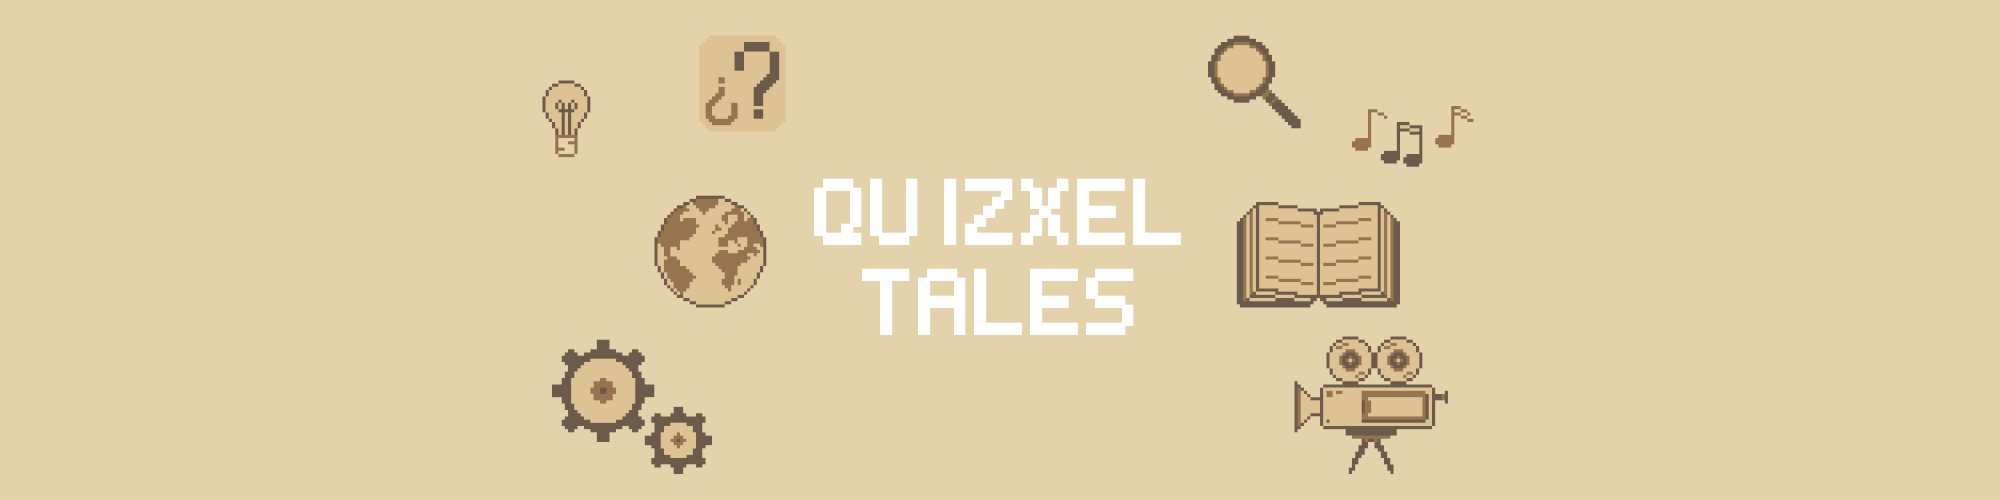 Quizxel Tales